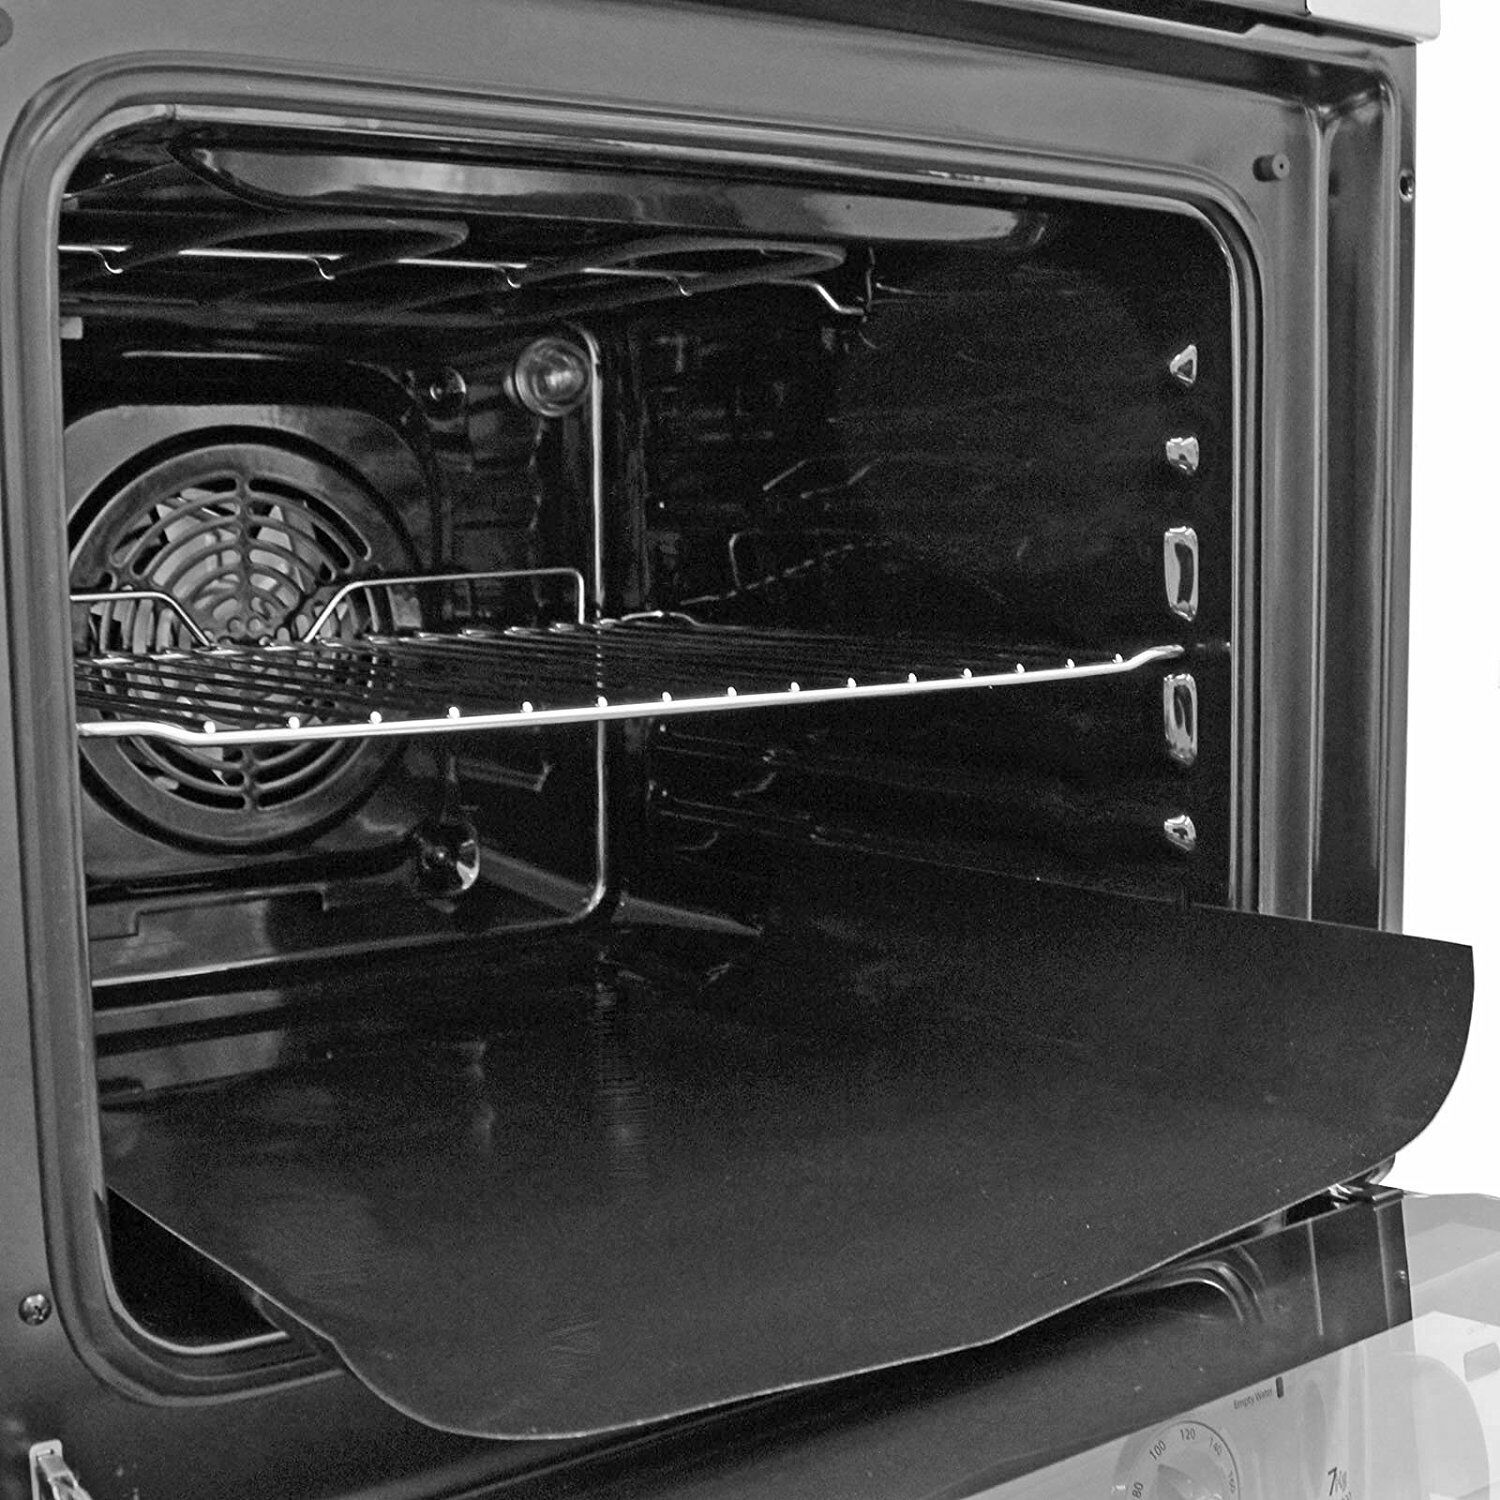 2 X Large Non Stick Oven Liner Reusable Teflon Dishwasher Safe Baking Spill Mat